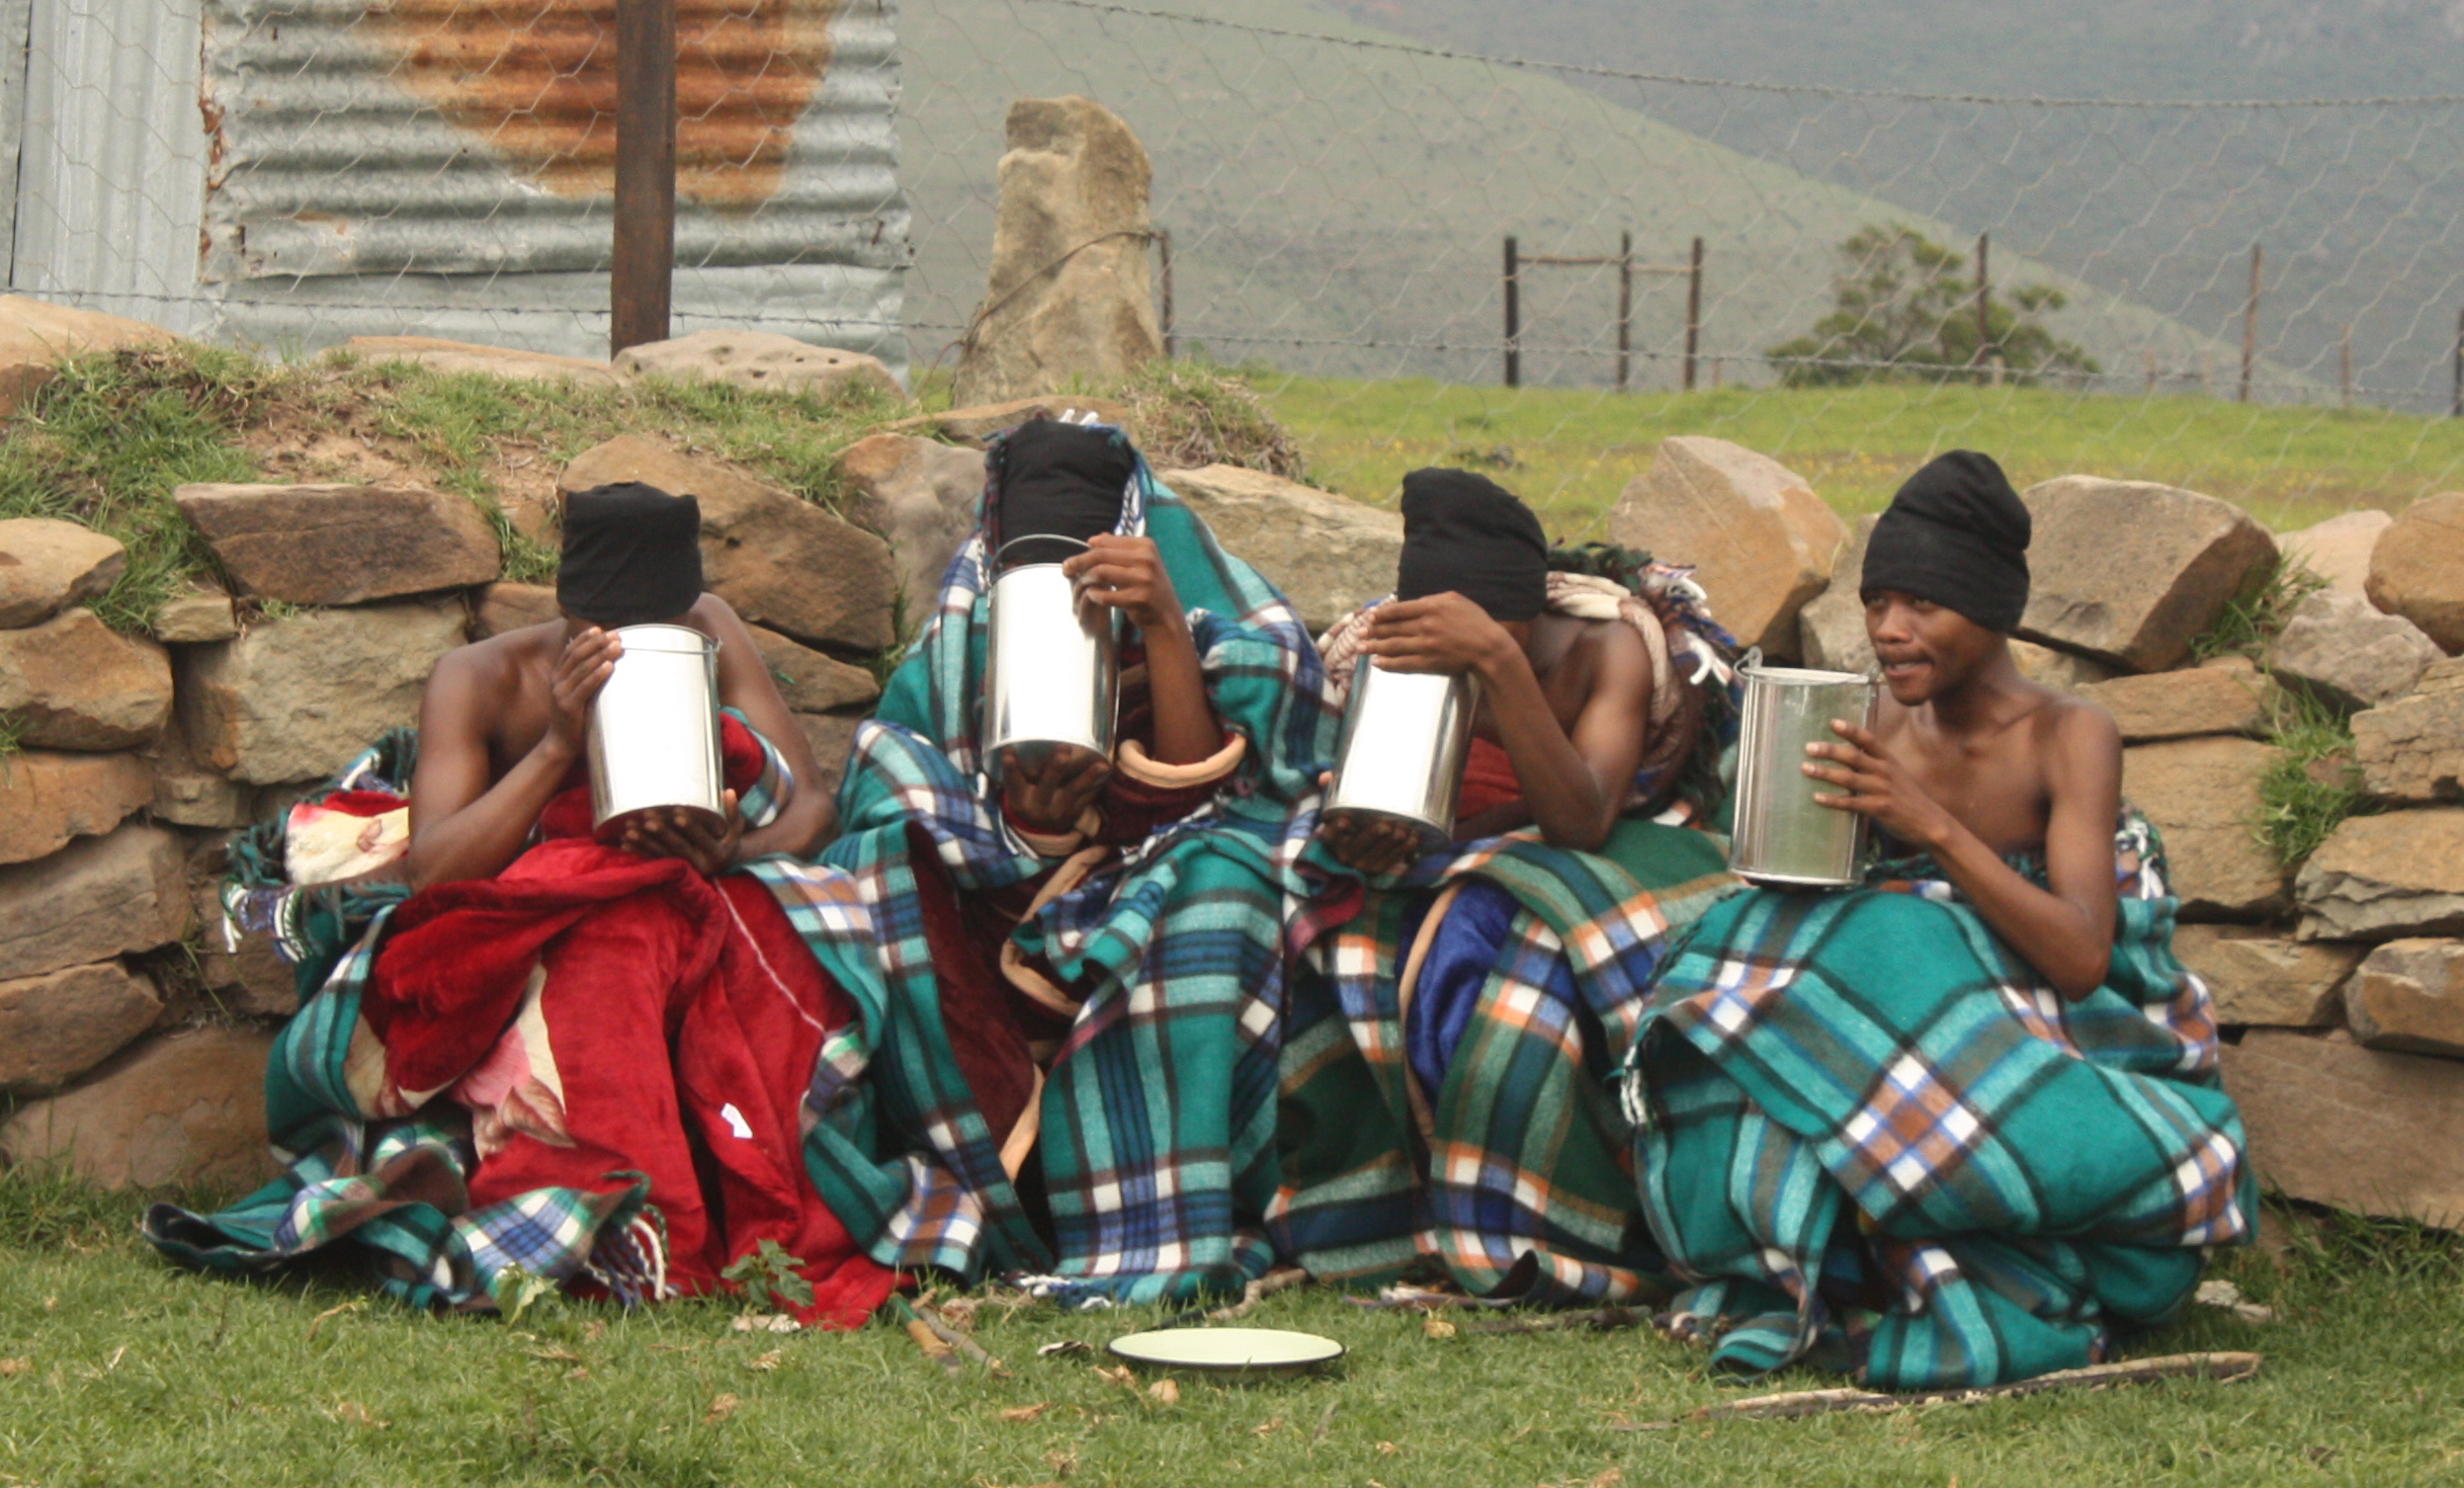 Amakwrala young circumcised men drinking Umqombothi after the trial